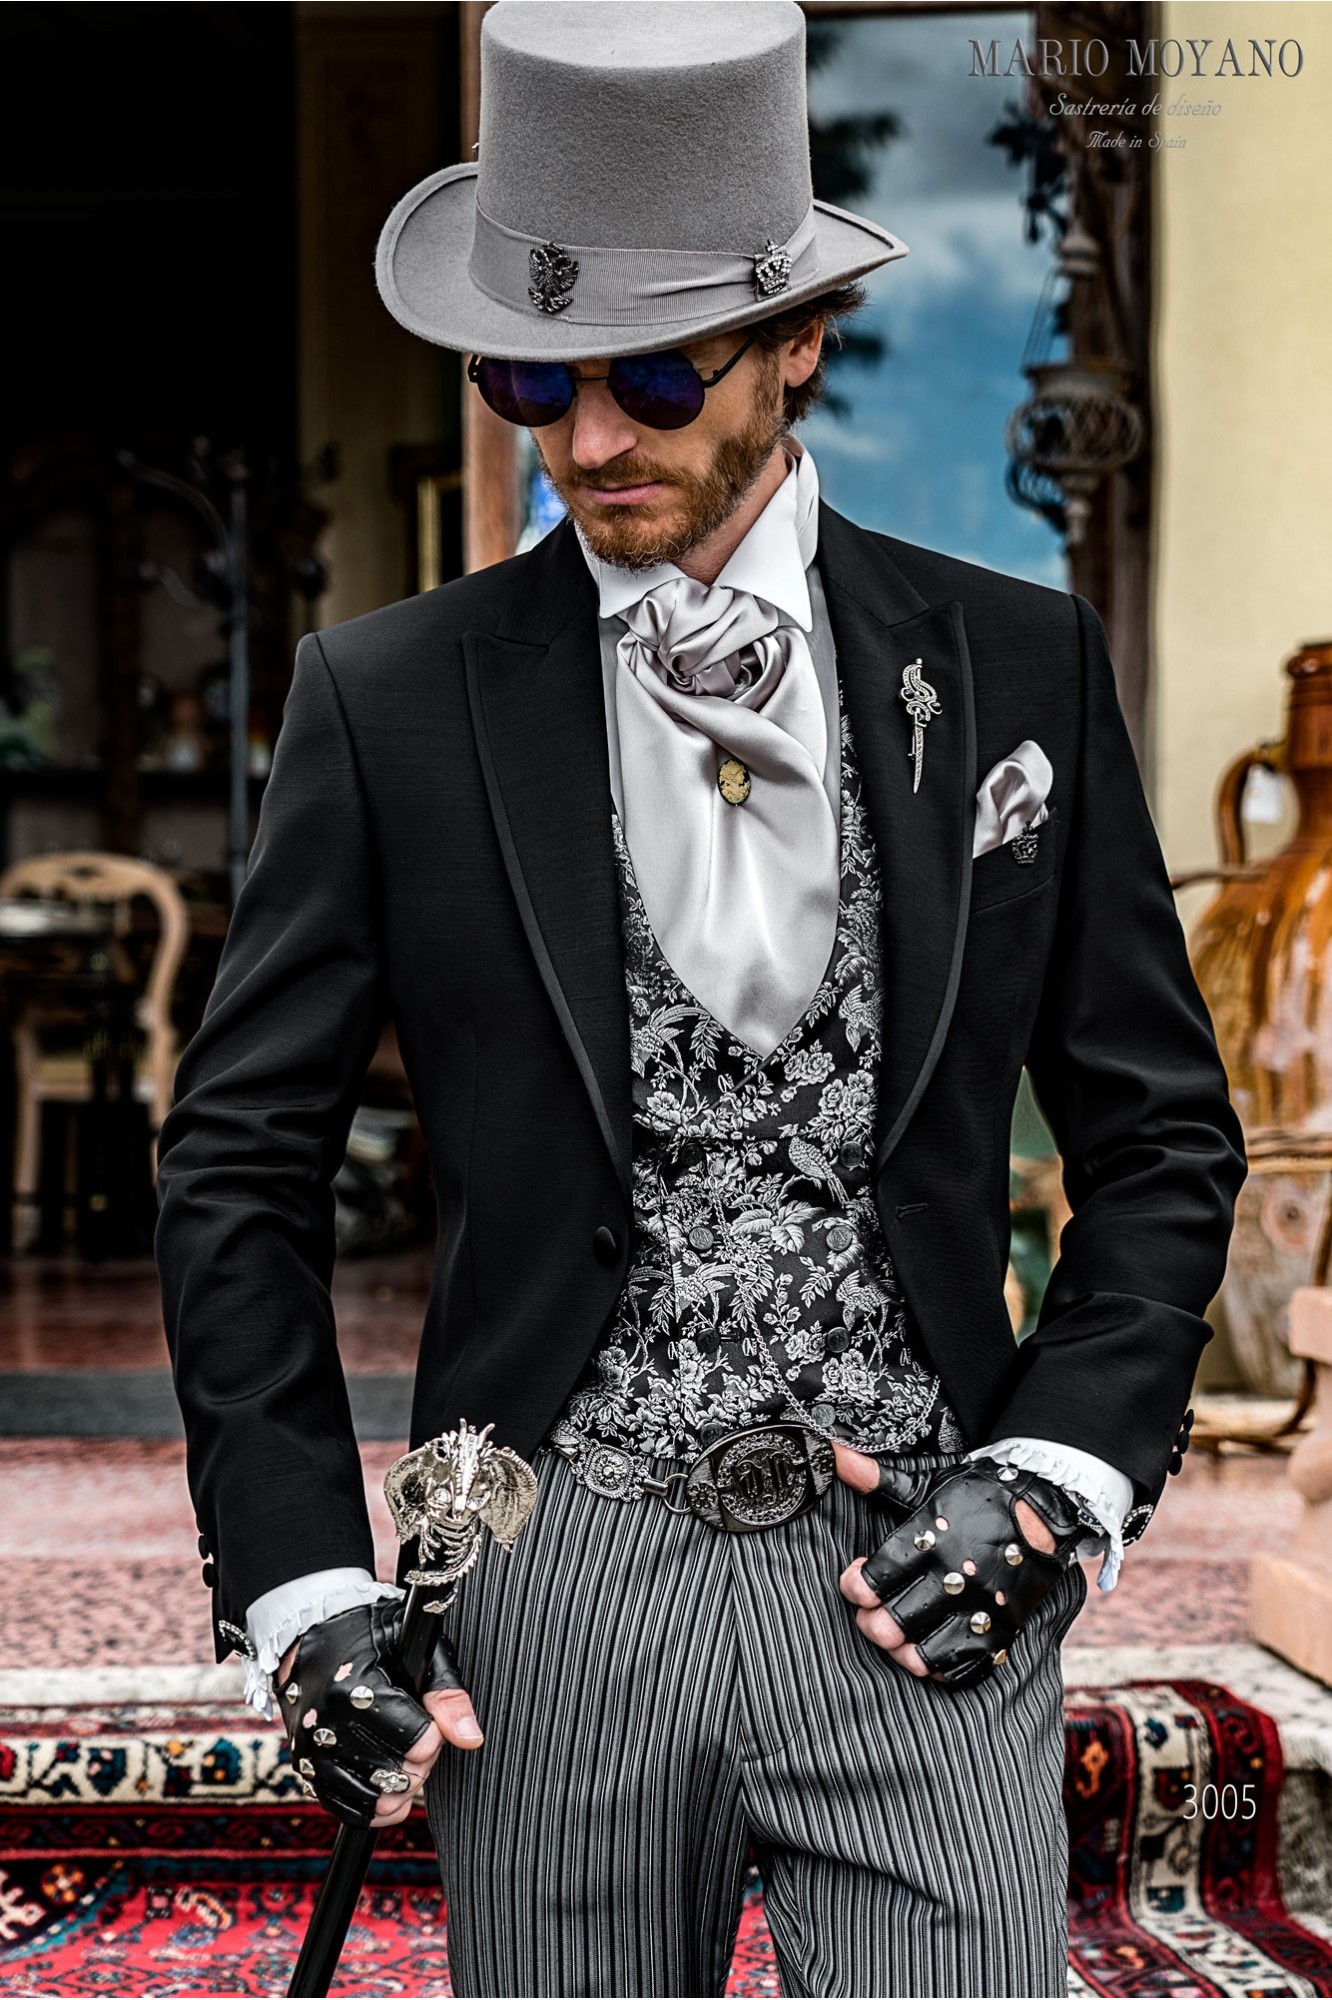 Trendsetting black victorian wedding frock coat steampunk suit 3005 Mario  Moyano